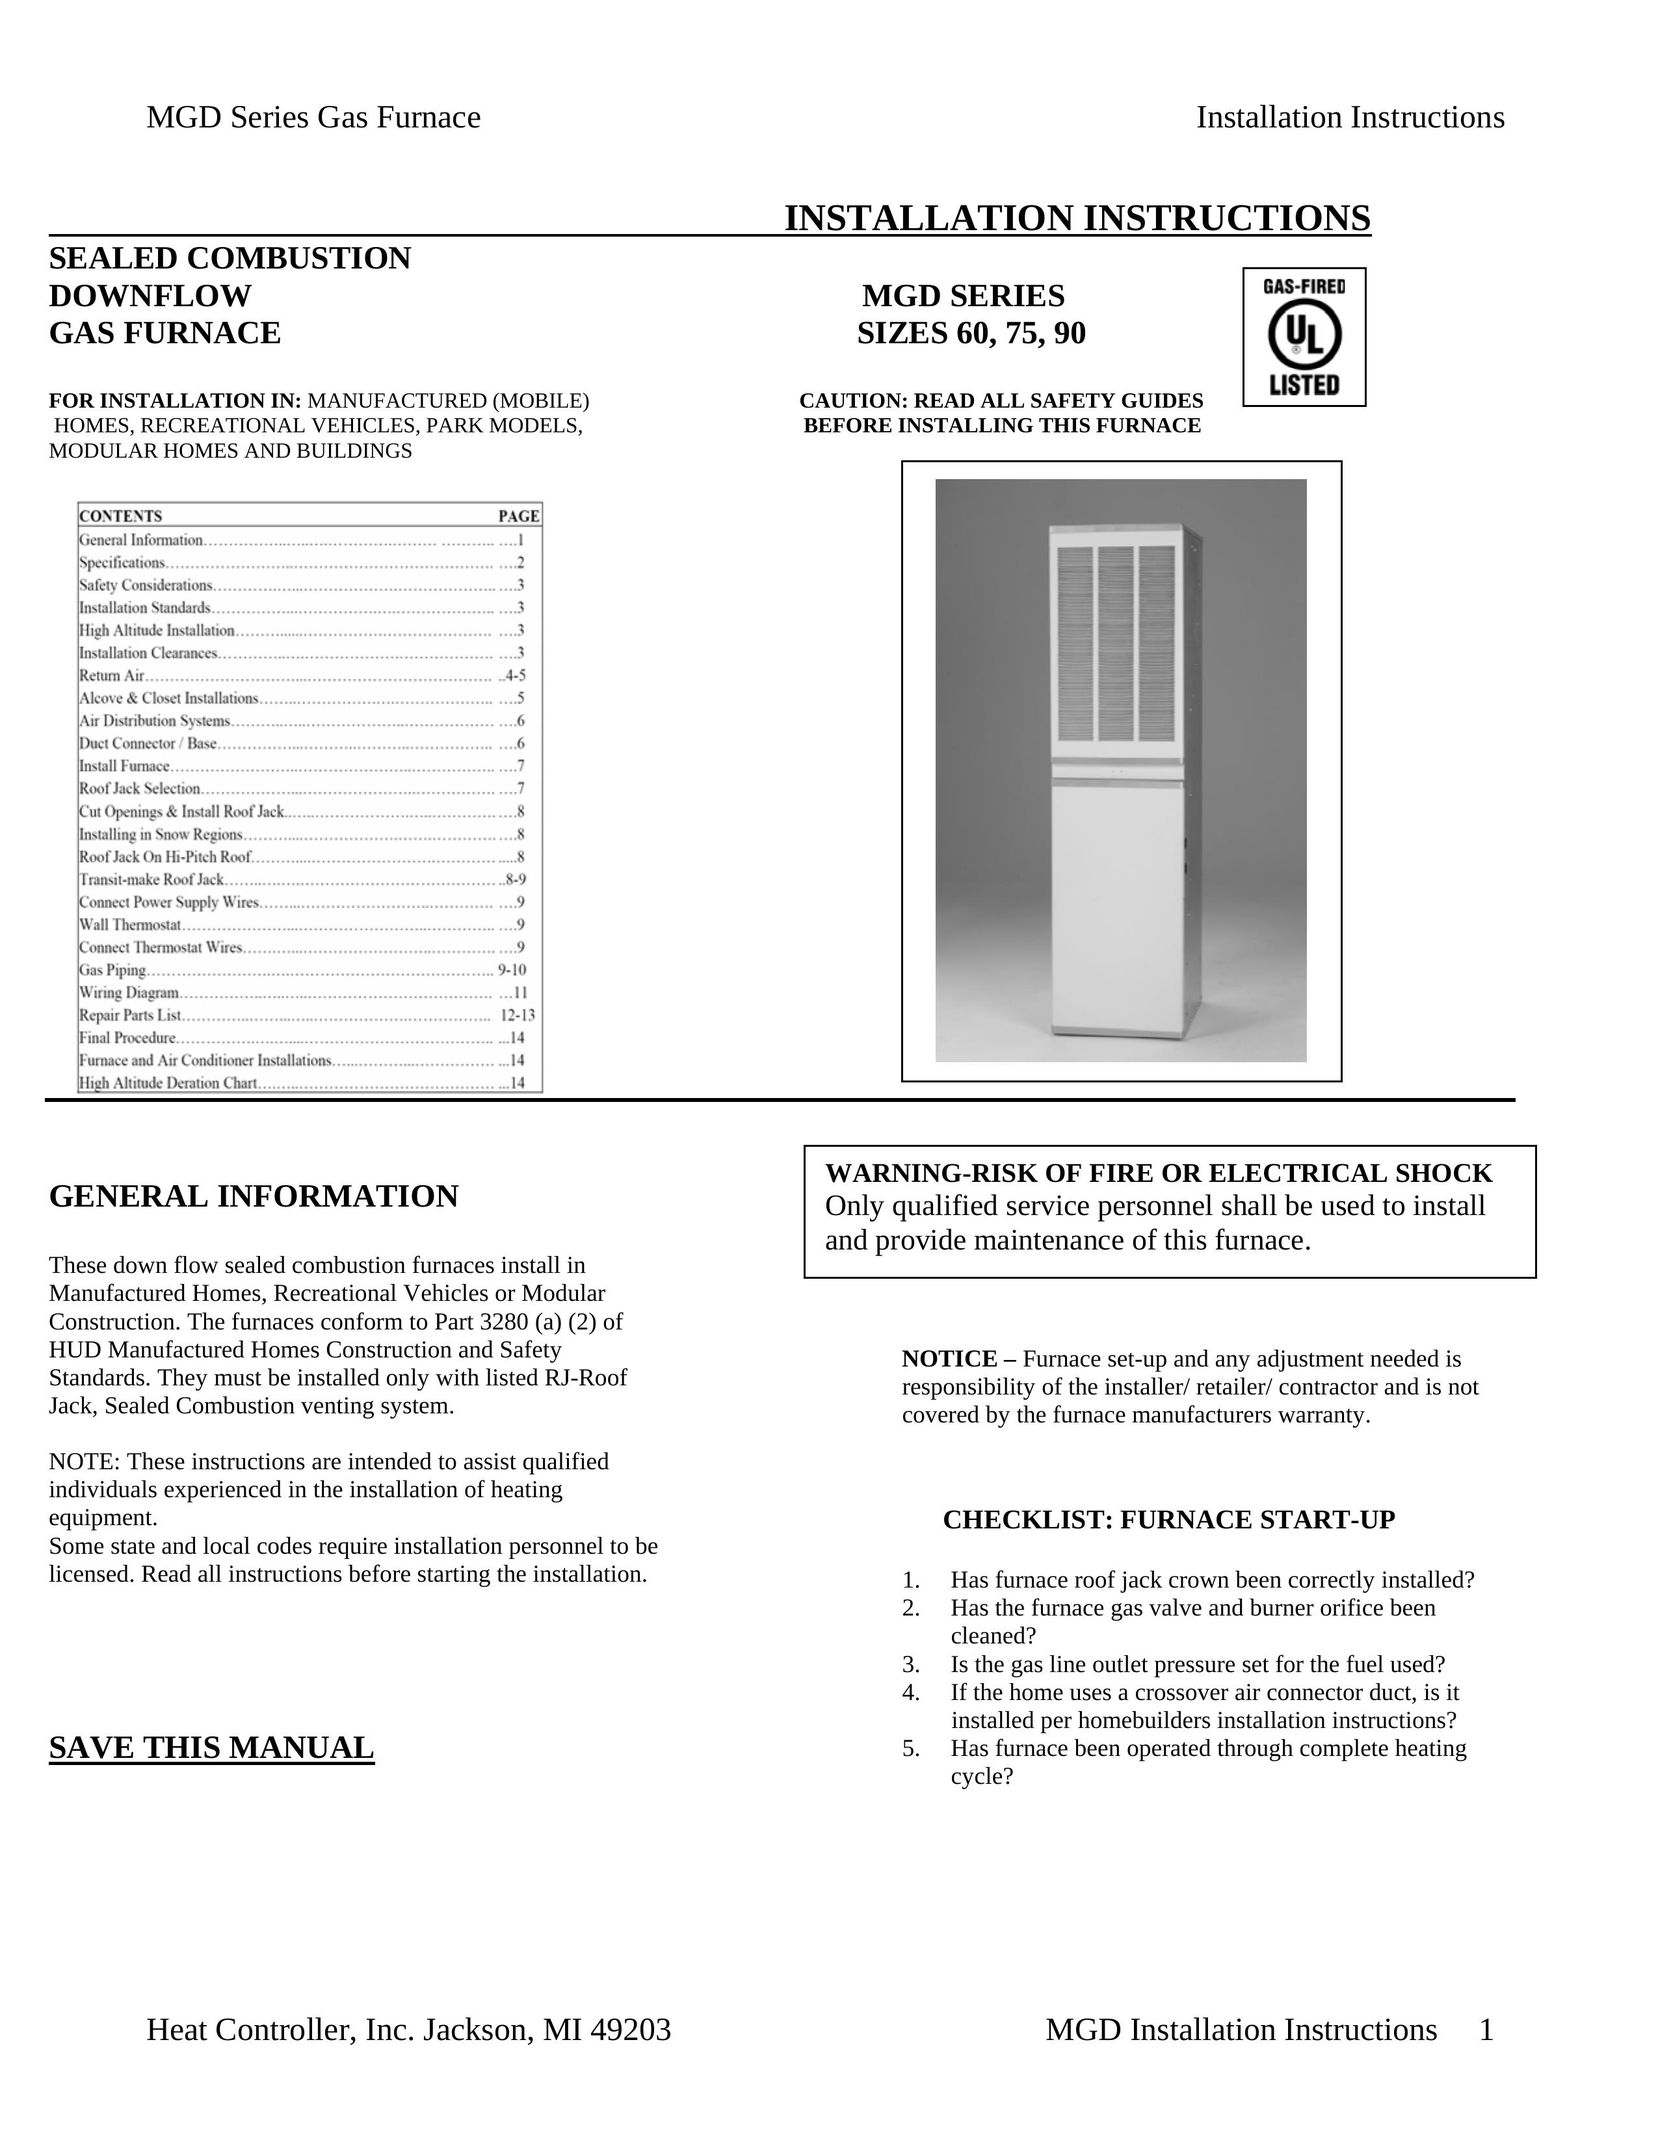 Heat Controller MGD90-E5A Furnace User Manual